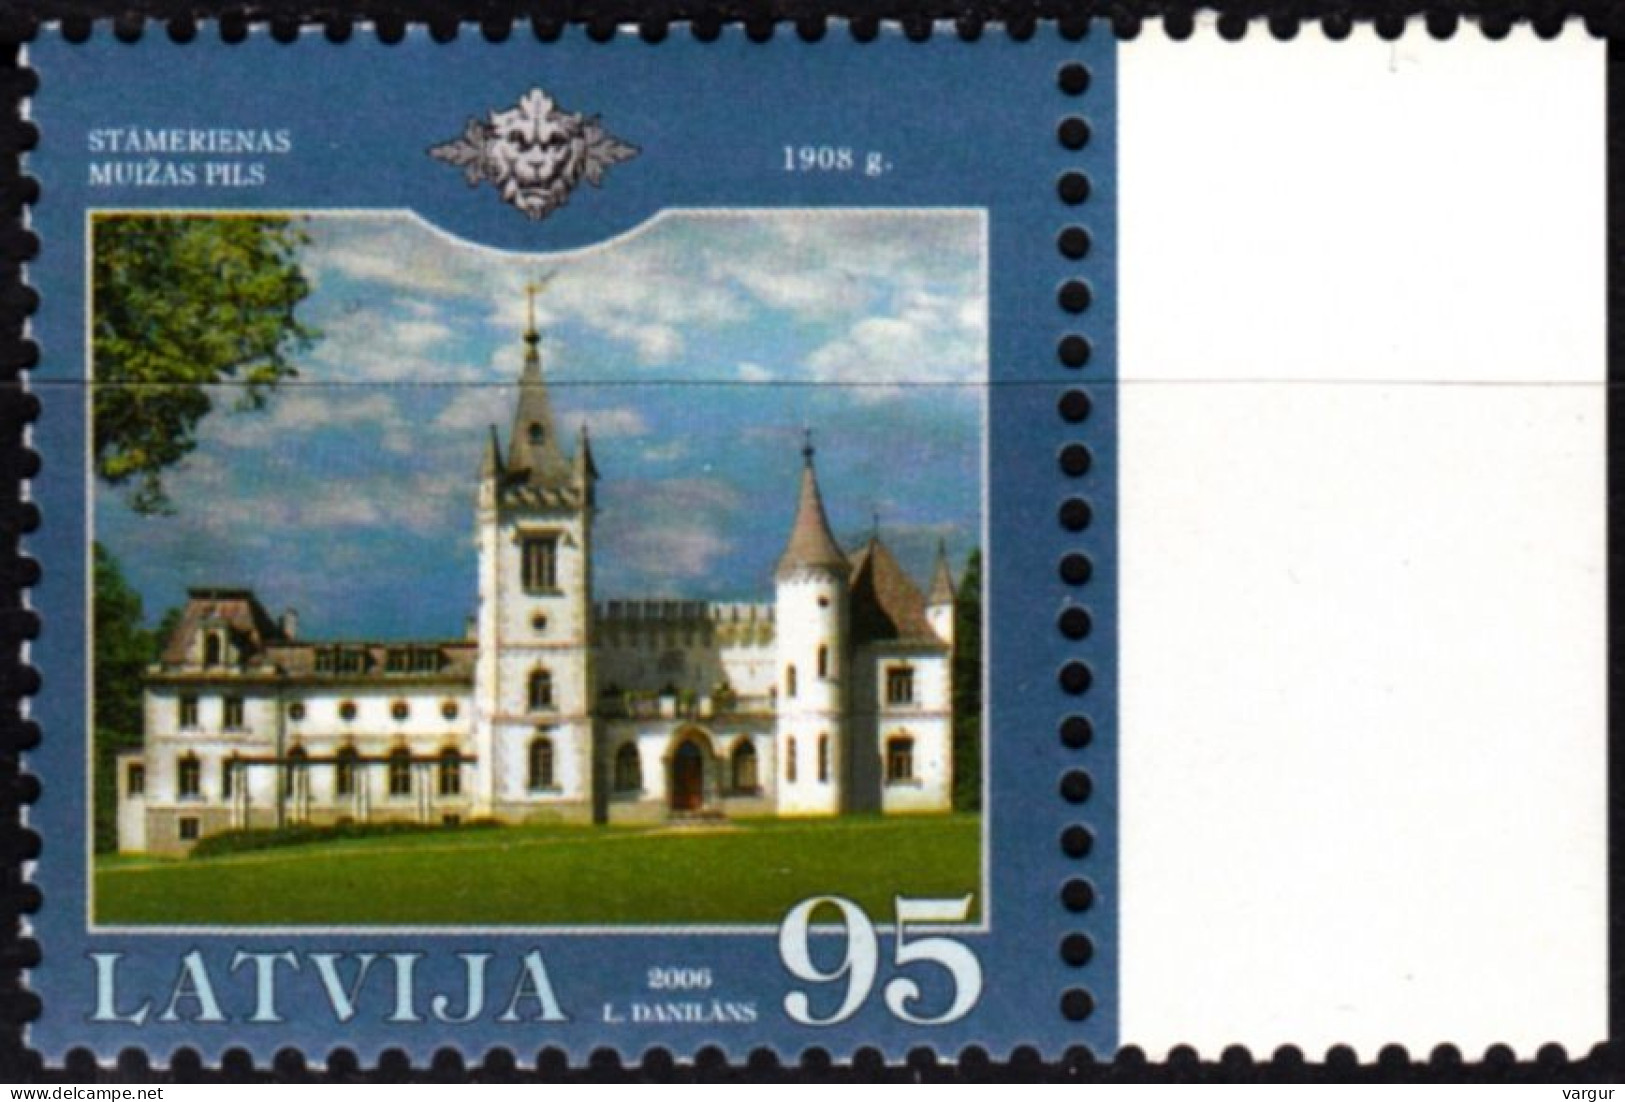 LATVIA 2006 Architecture: Palace Of Stamerienas, MNH. 45% Face Value - Castles